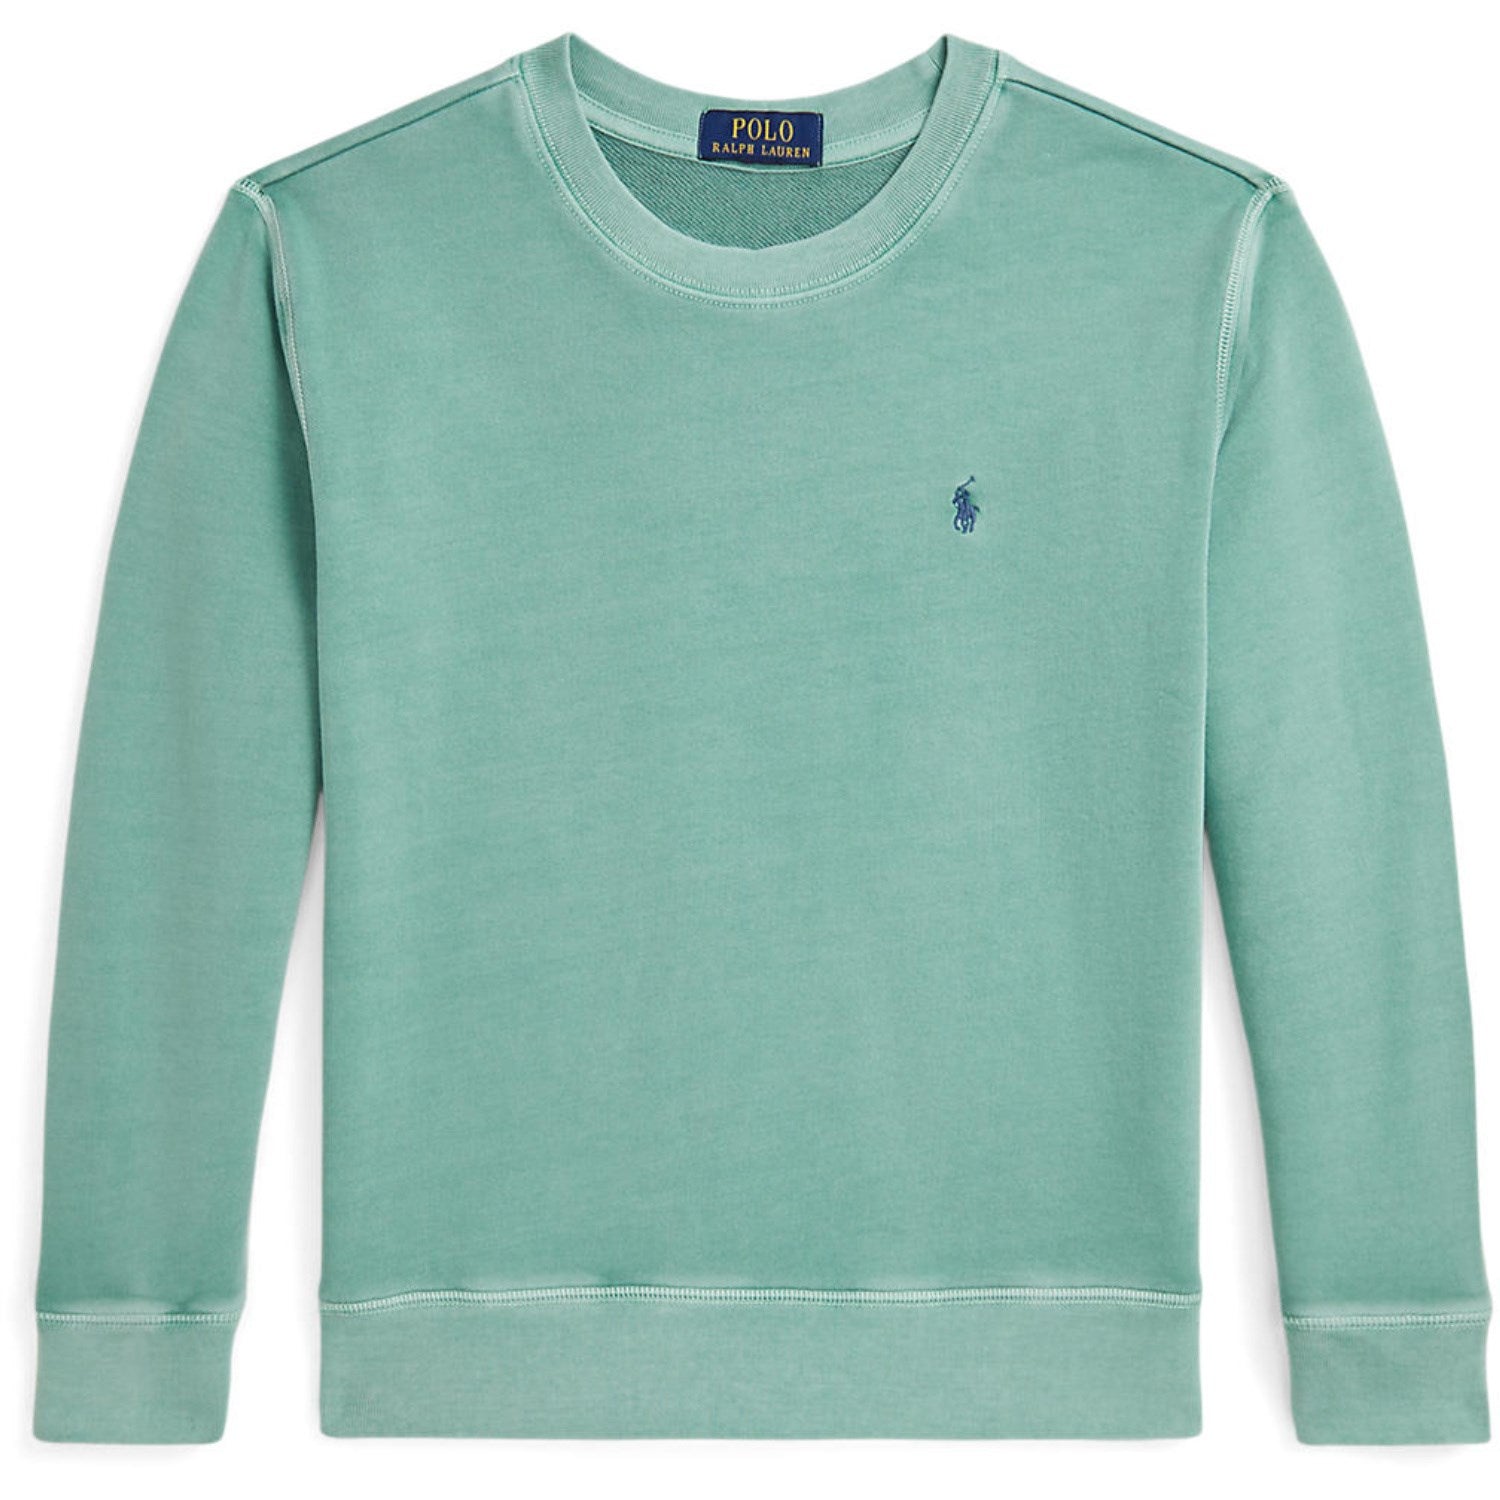 Polo Ralph Lauren Faded Mint Sweatshirt